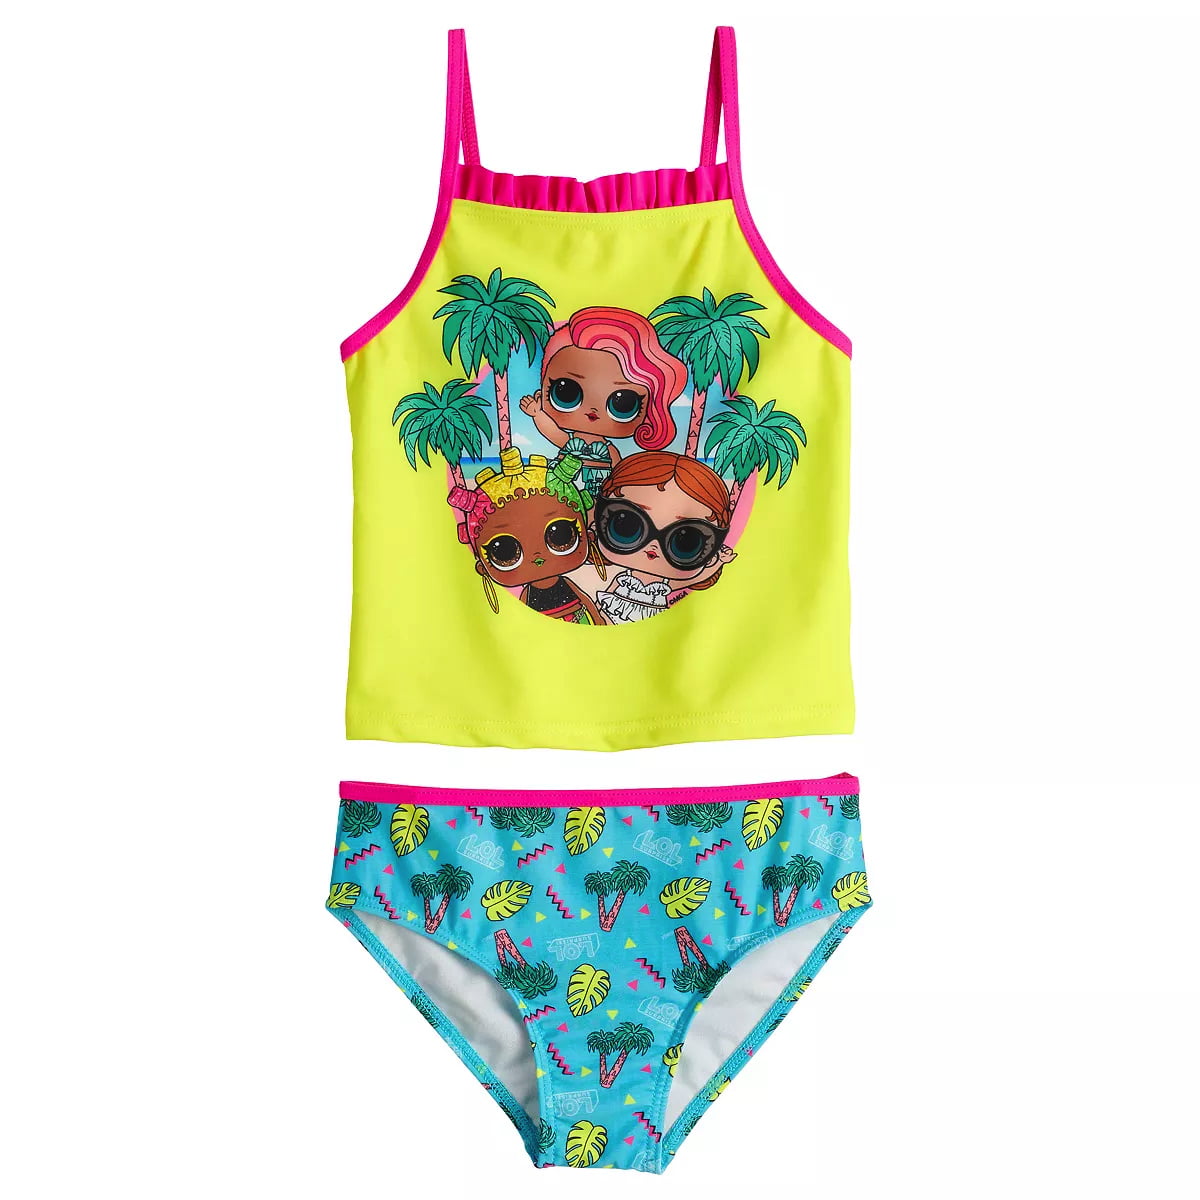 Lol Surprise Dolls Kids Girls Swimwear Bownot Swimming Bathing Suit for Age 3-9Y 